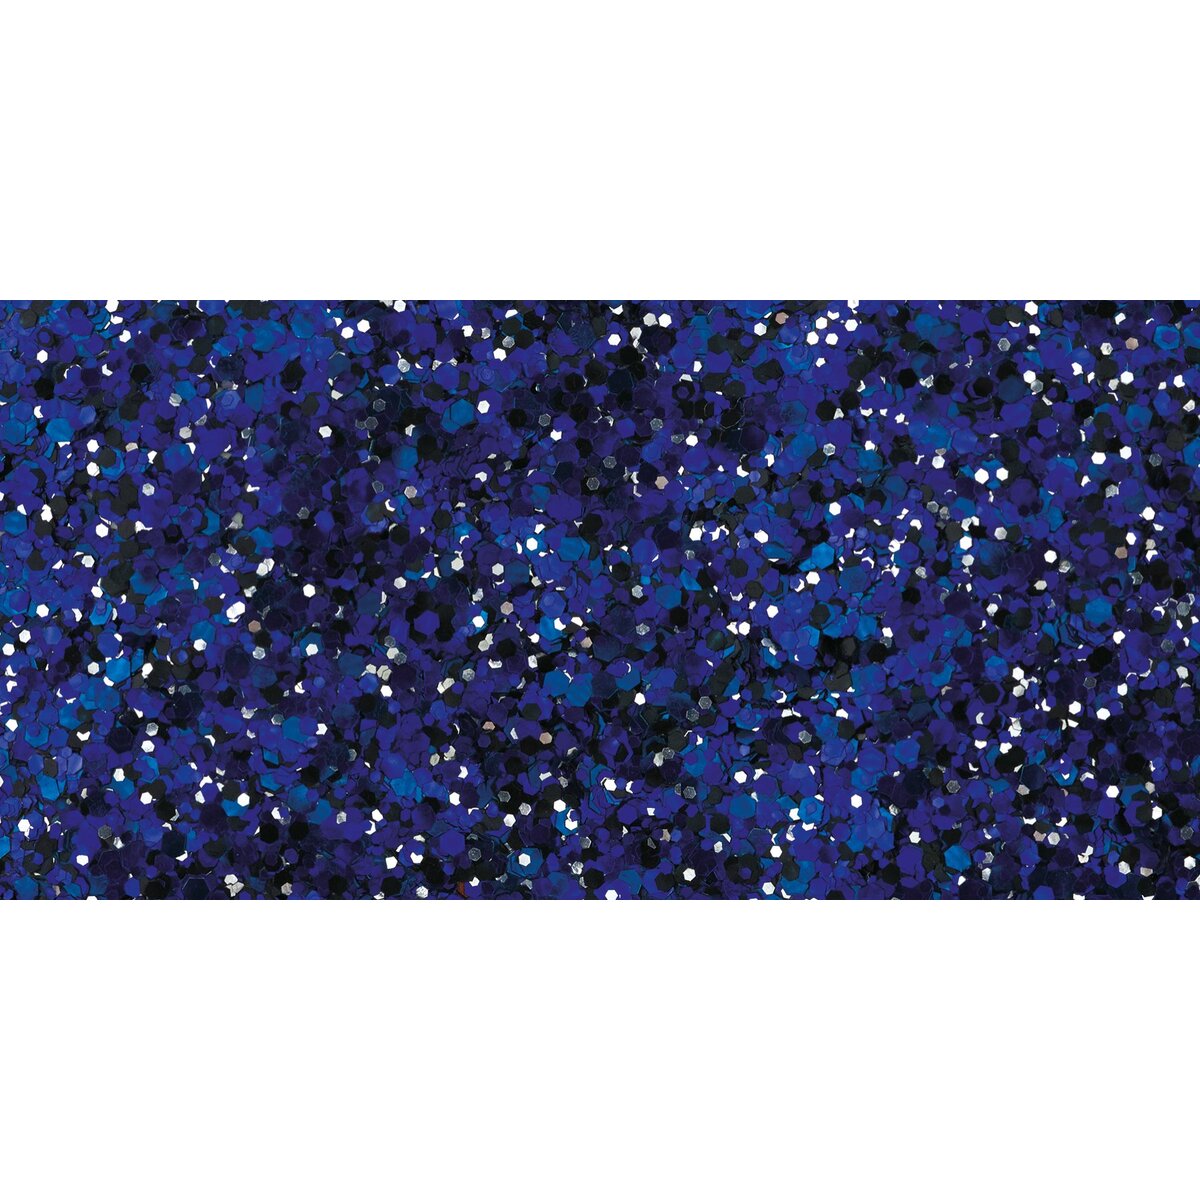 DecoArt Galaxy Glitter Paint - Deep Space Blue, 2 oz